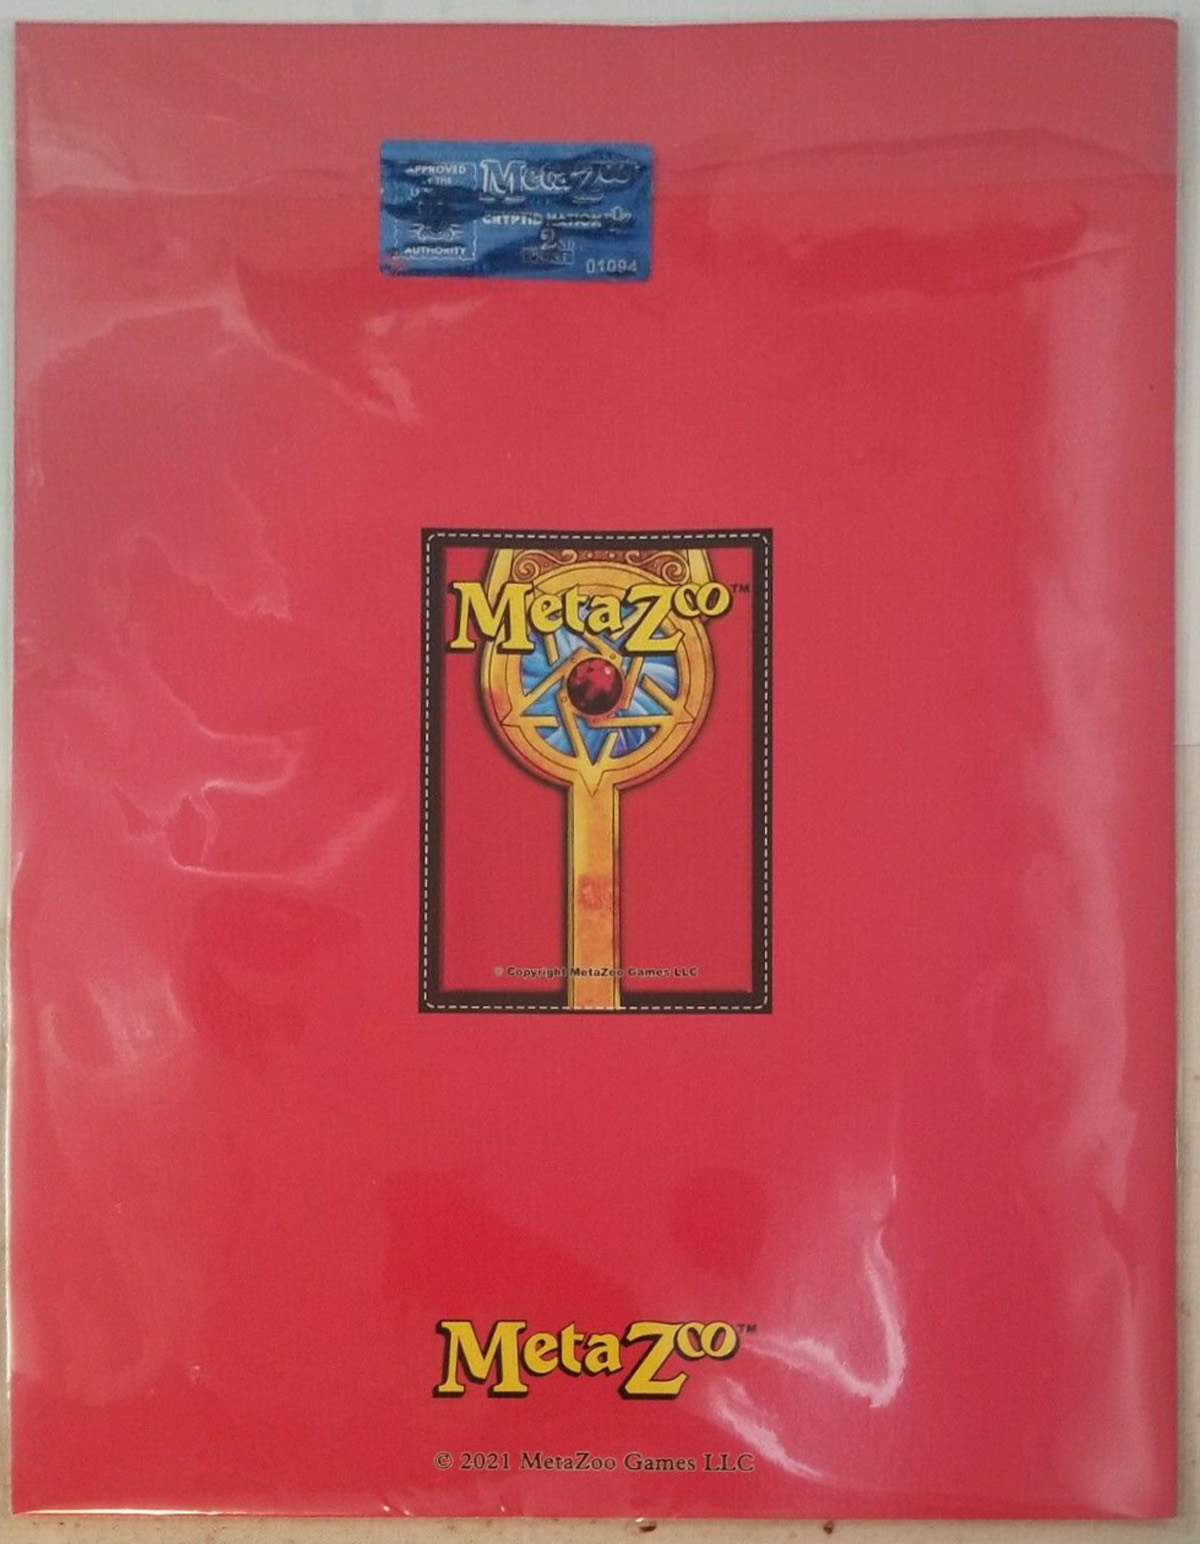 MetaZoo Illustrated Novel - Chapter 1 Print 2 - Back